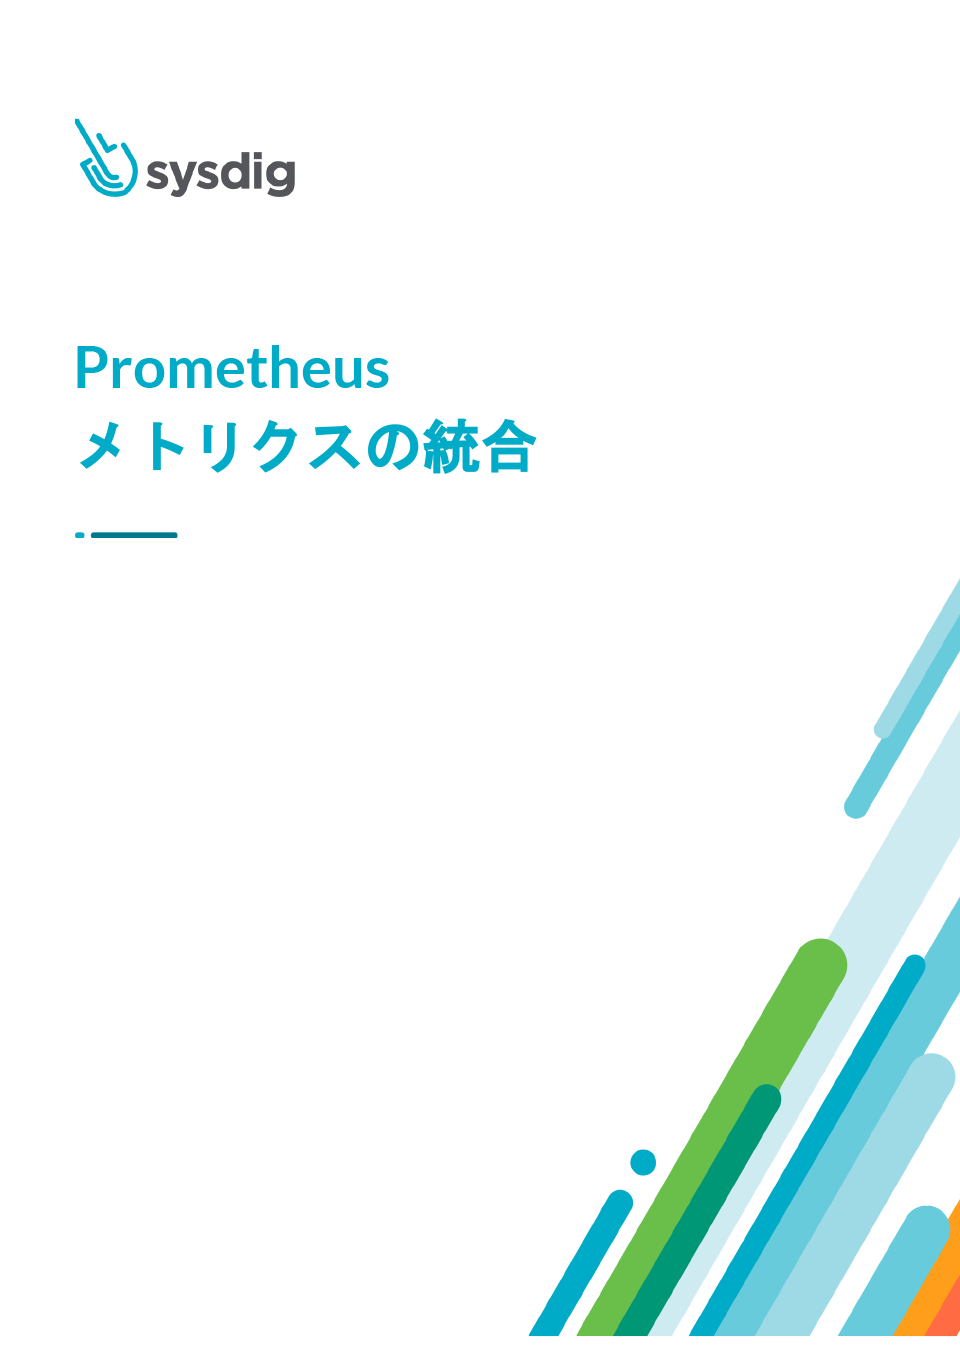 「Prometheus メトリクスの統合」を公開しました